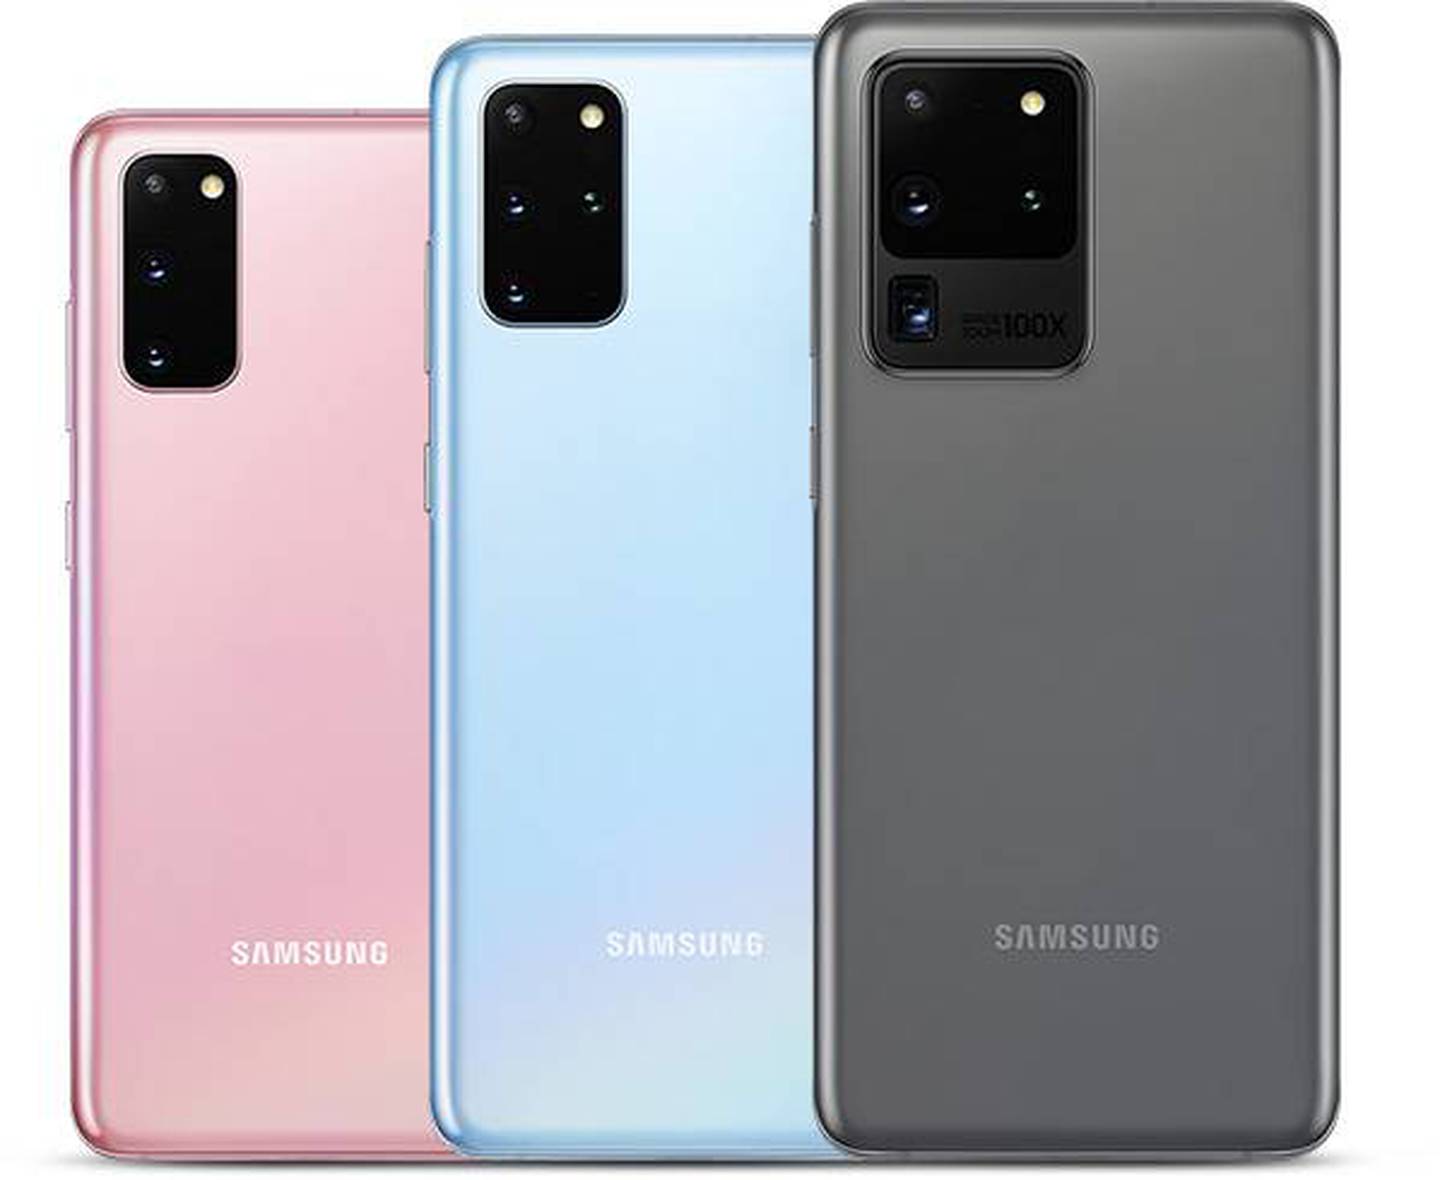 Samsung 2020 купить. Самсунг а20 2020. Samsung Galaxy s20 2020. Samsung Galaxy s20 Plus. Смартфоны самсунг 2020.